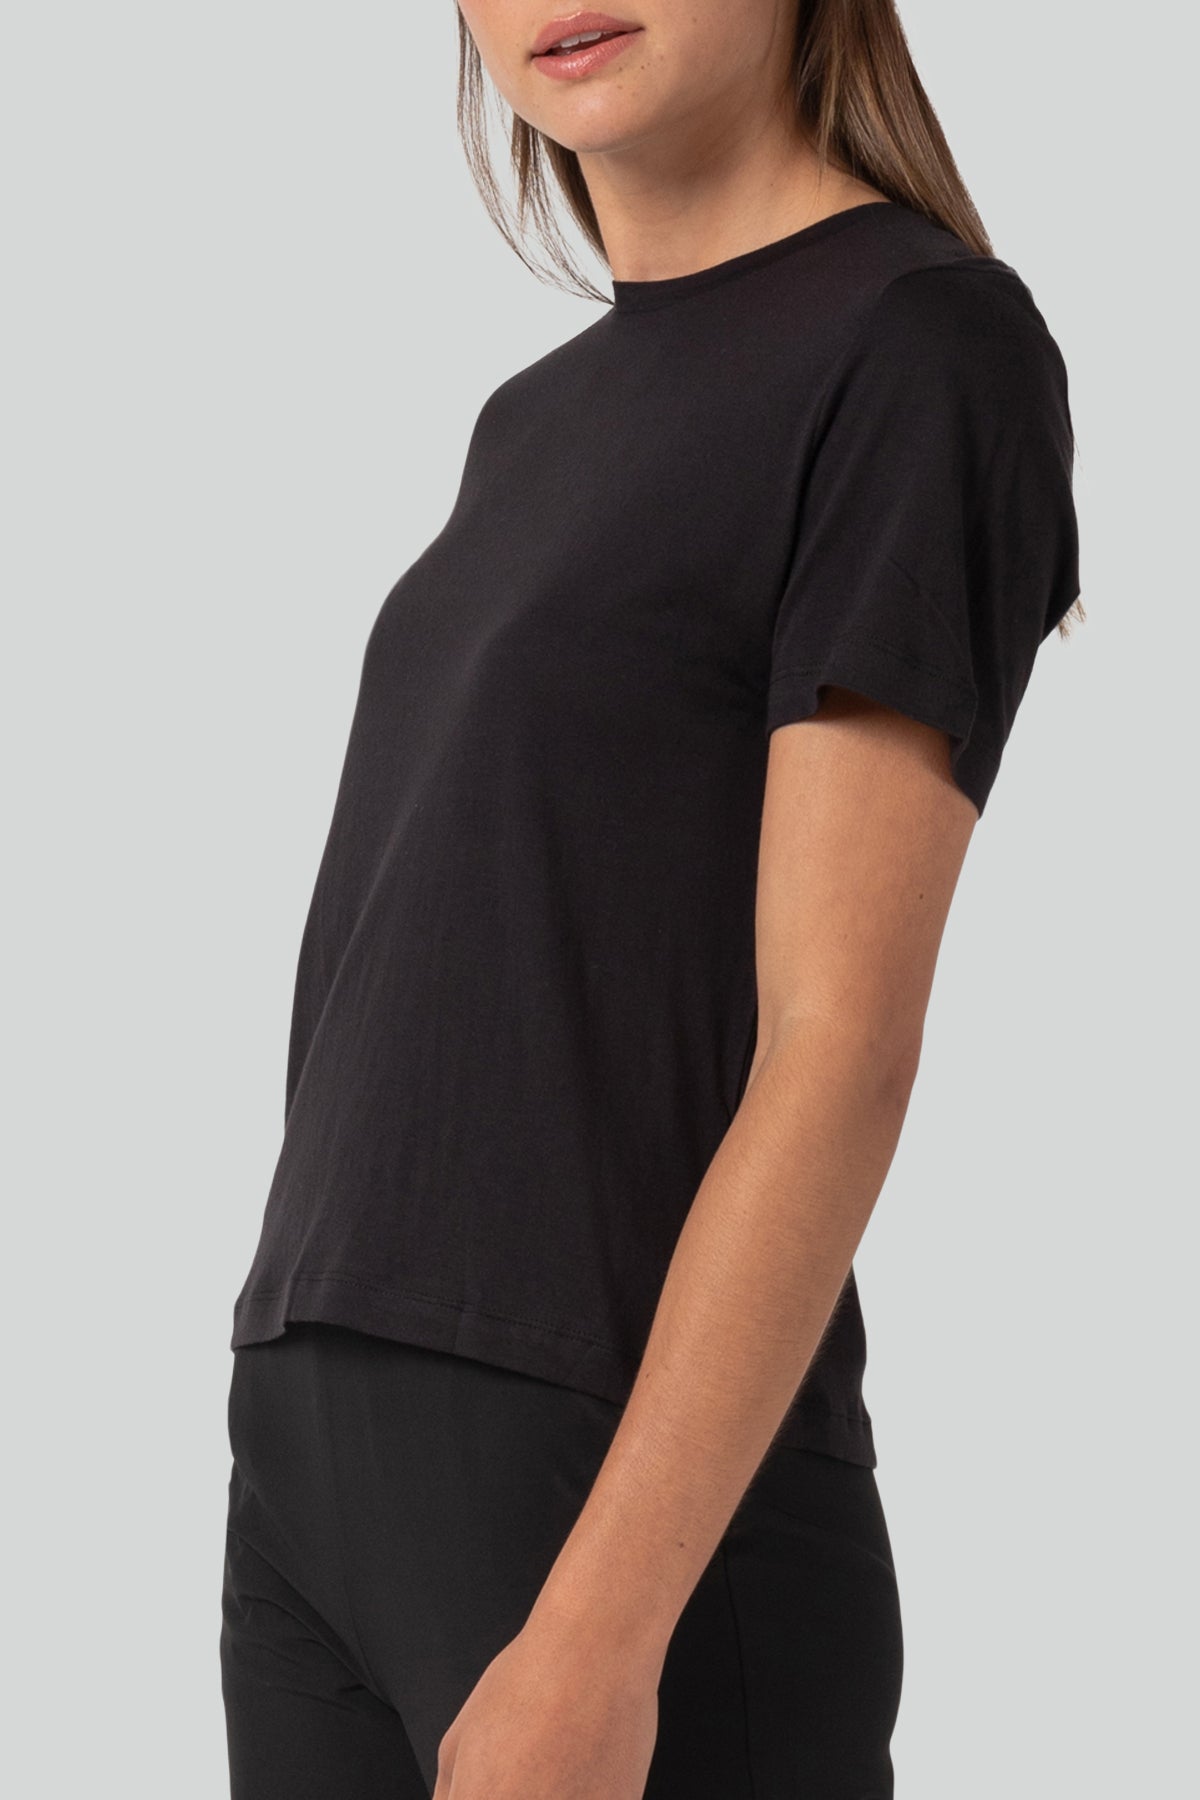 Buy Women's T-Shirt - Short Sleeves & Get 20% Off